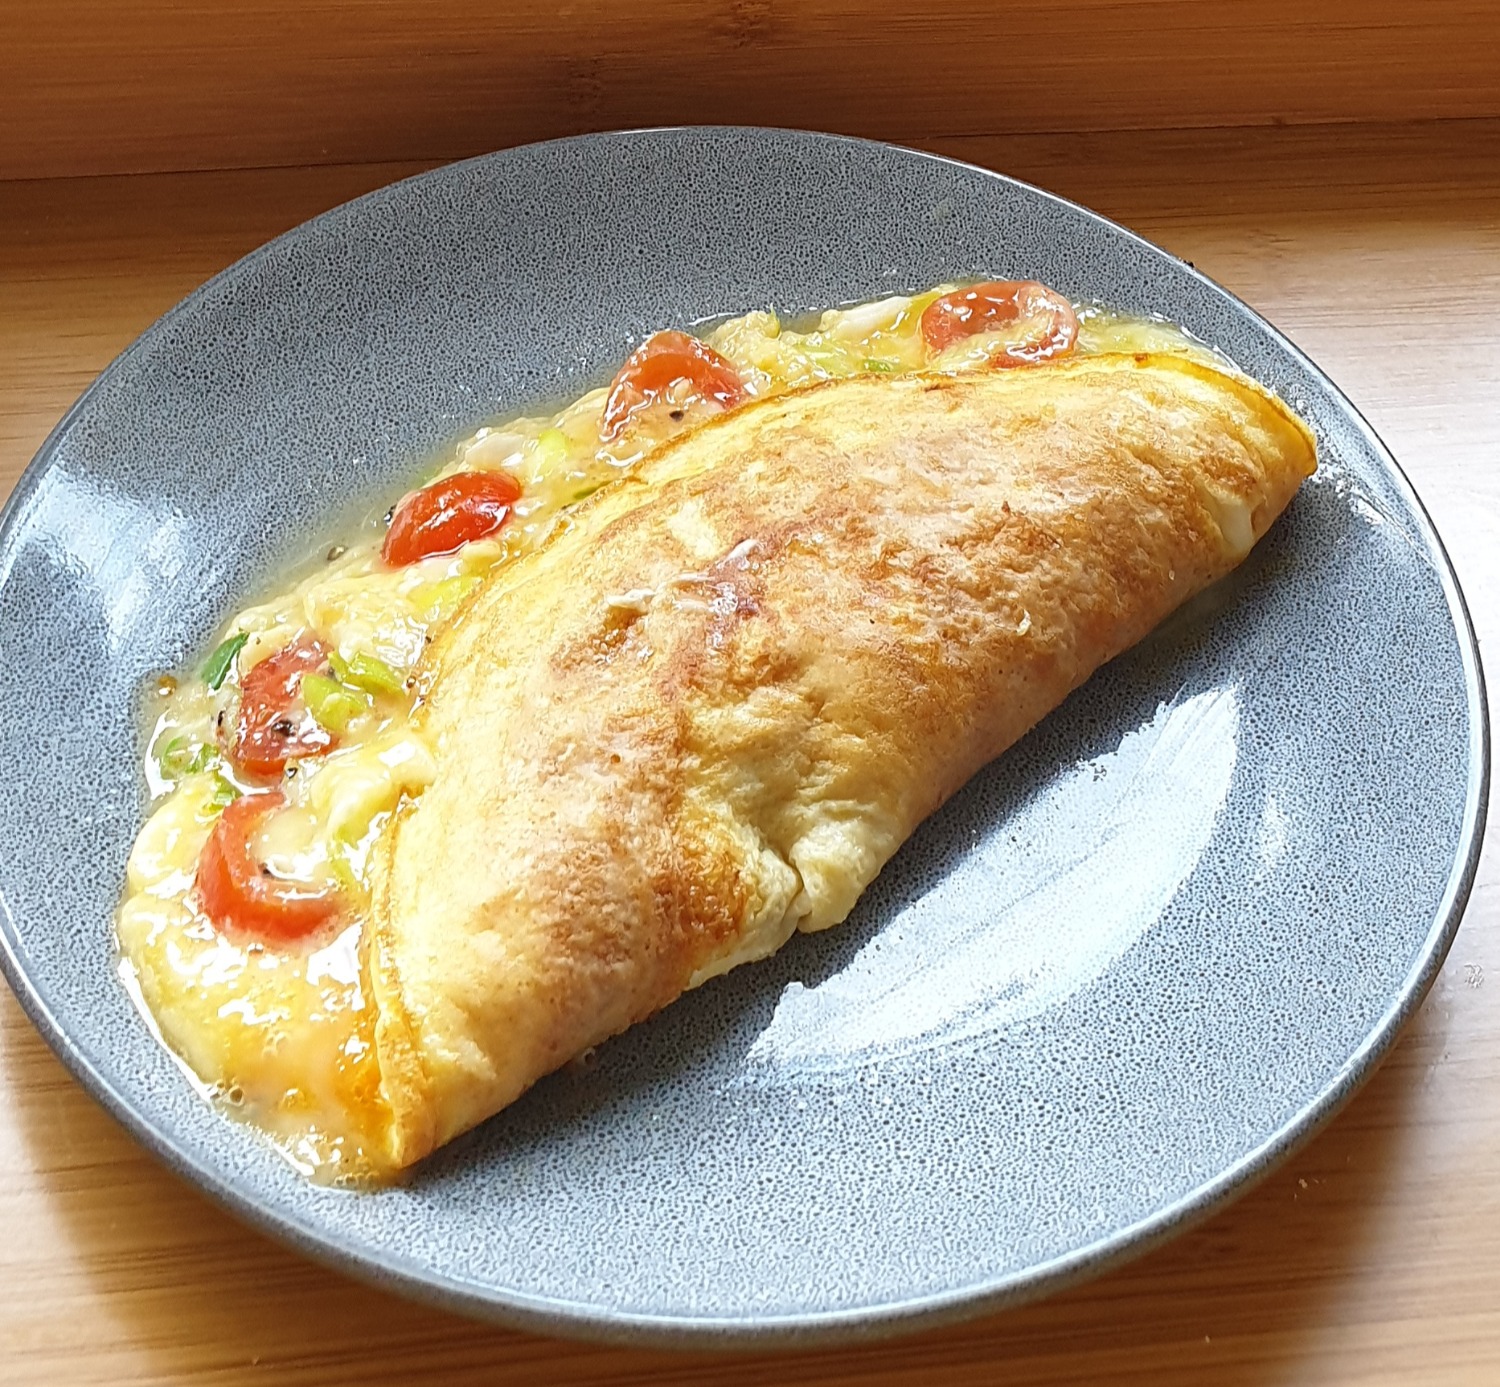 write a descriptive essay on how to make tomato omelette